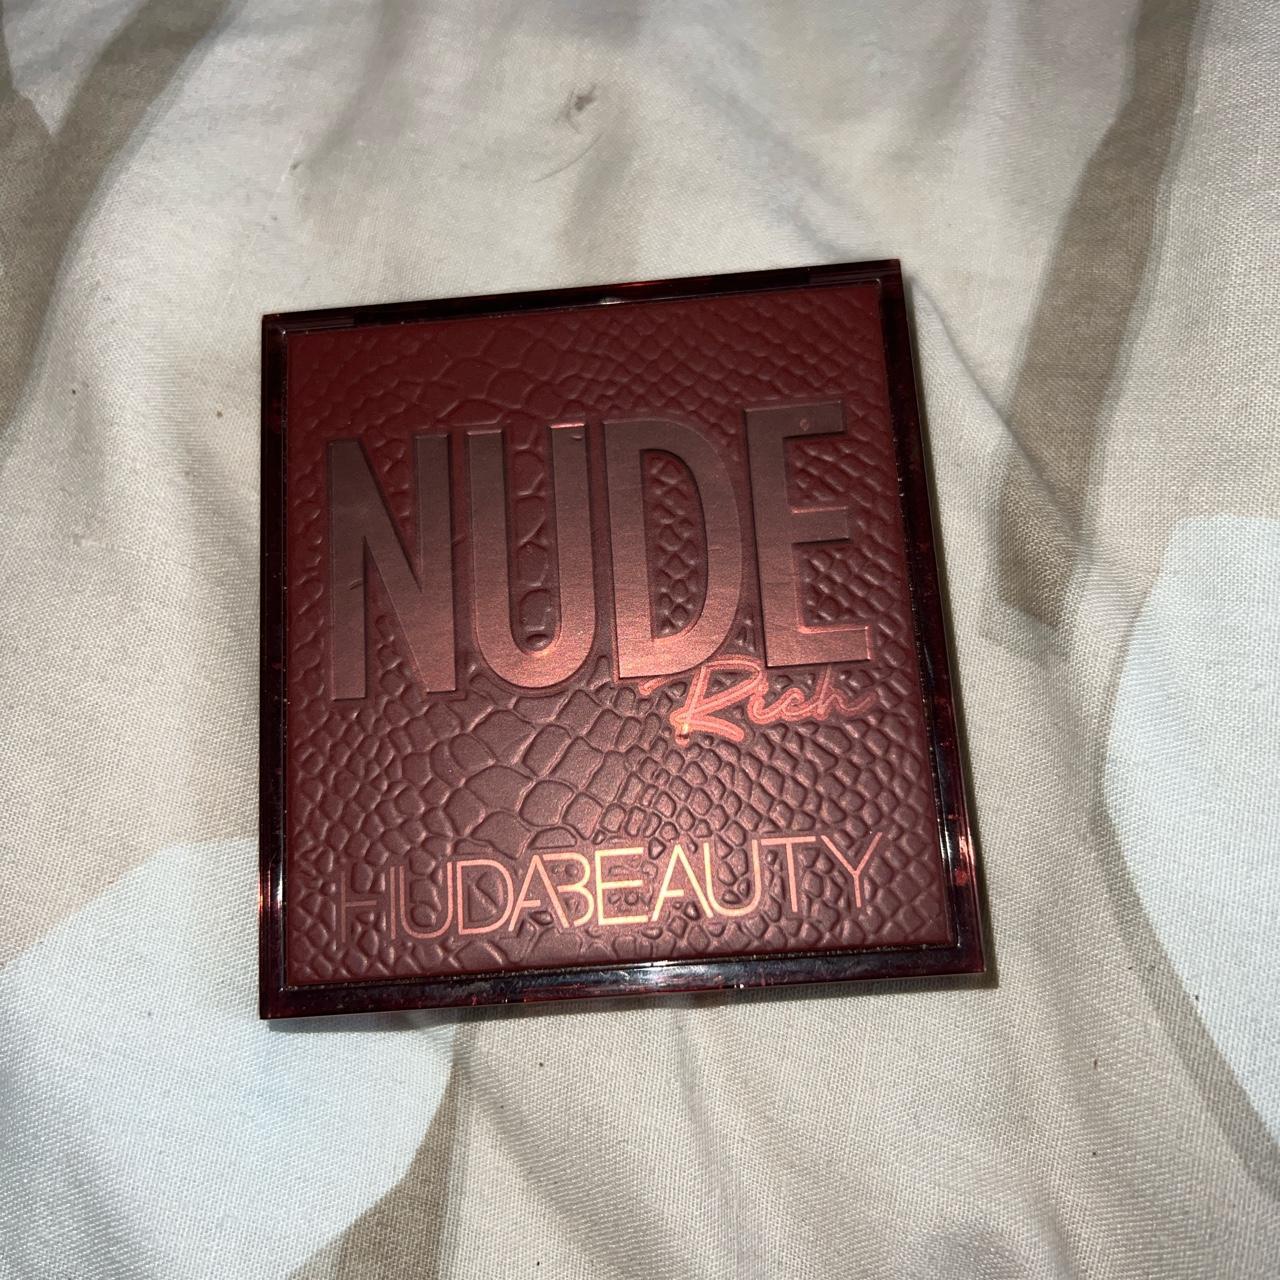 Huda Beauty Nude Rich palette. Usage shown - Depop